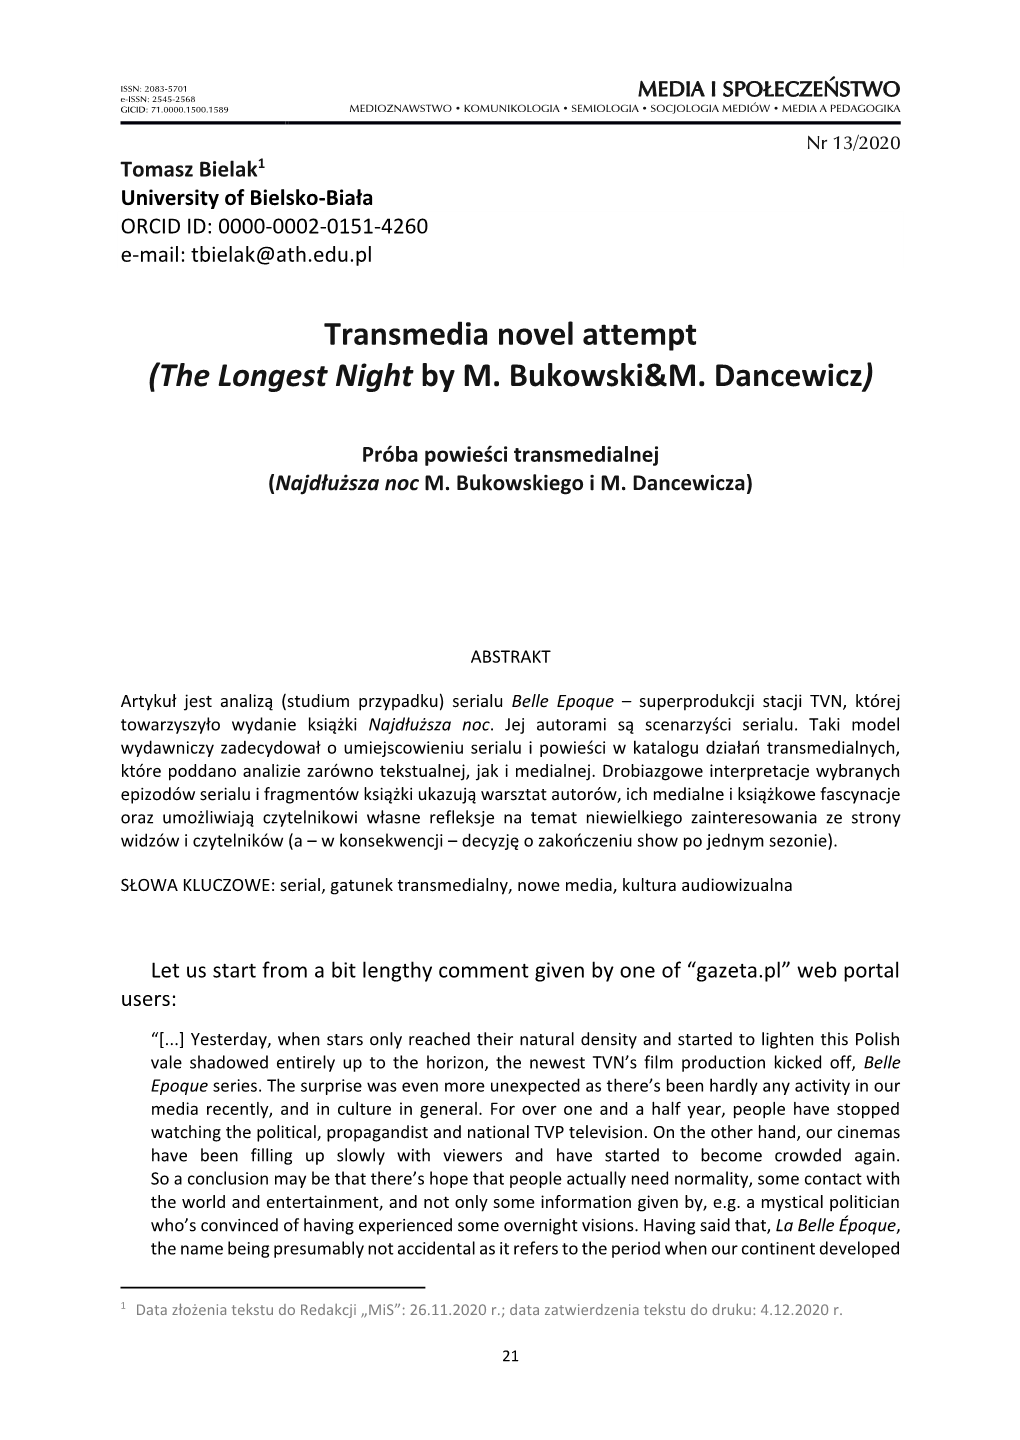 Transmedia Novel Attempt (The Longest Night by M. Bukowski&M